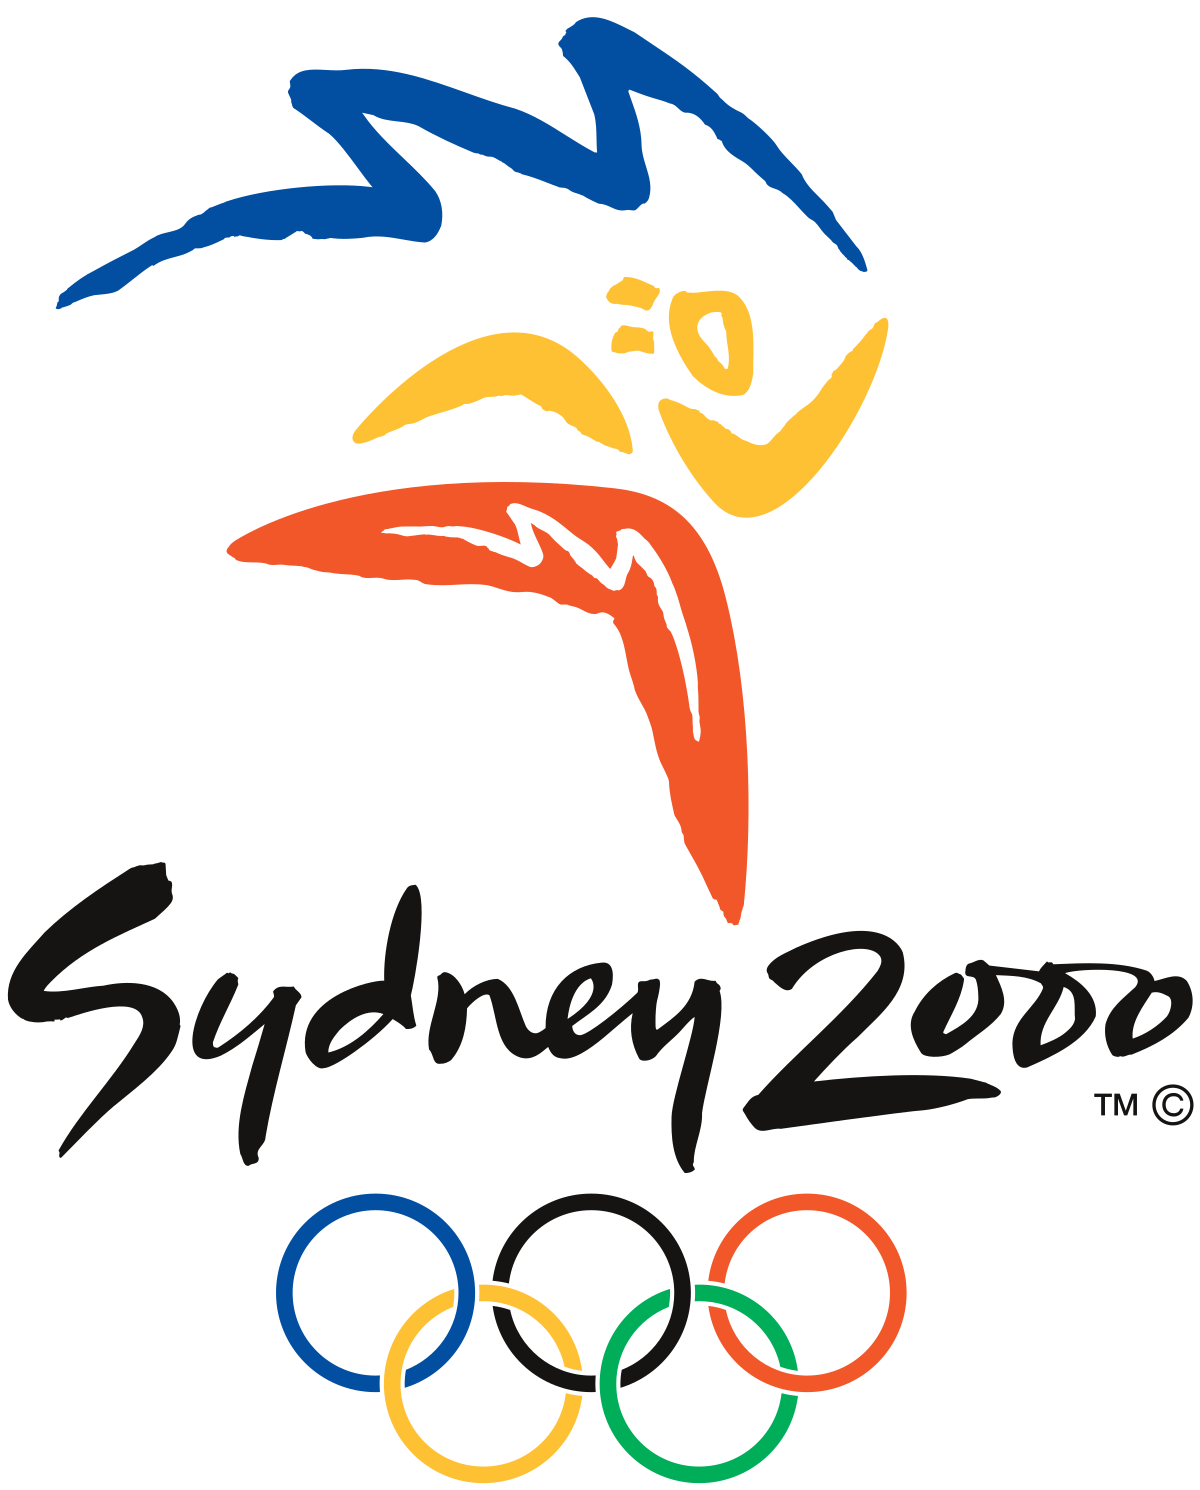 27TH Sydney Olympics, 2000